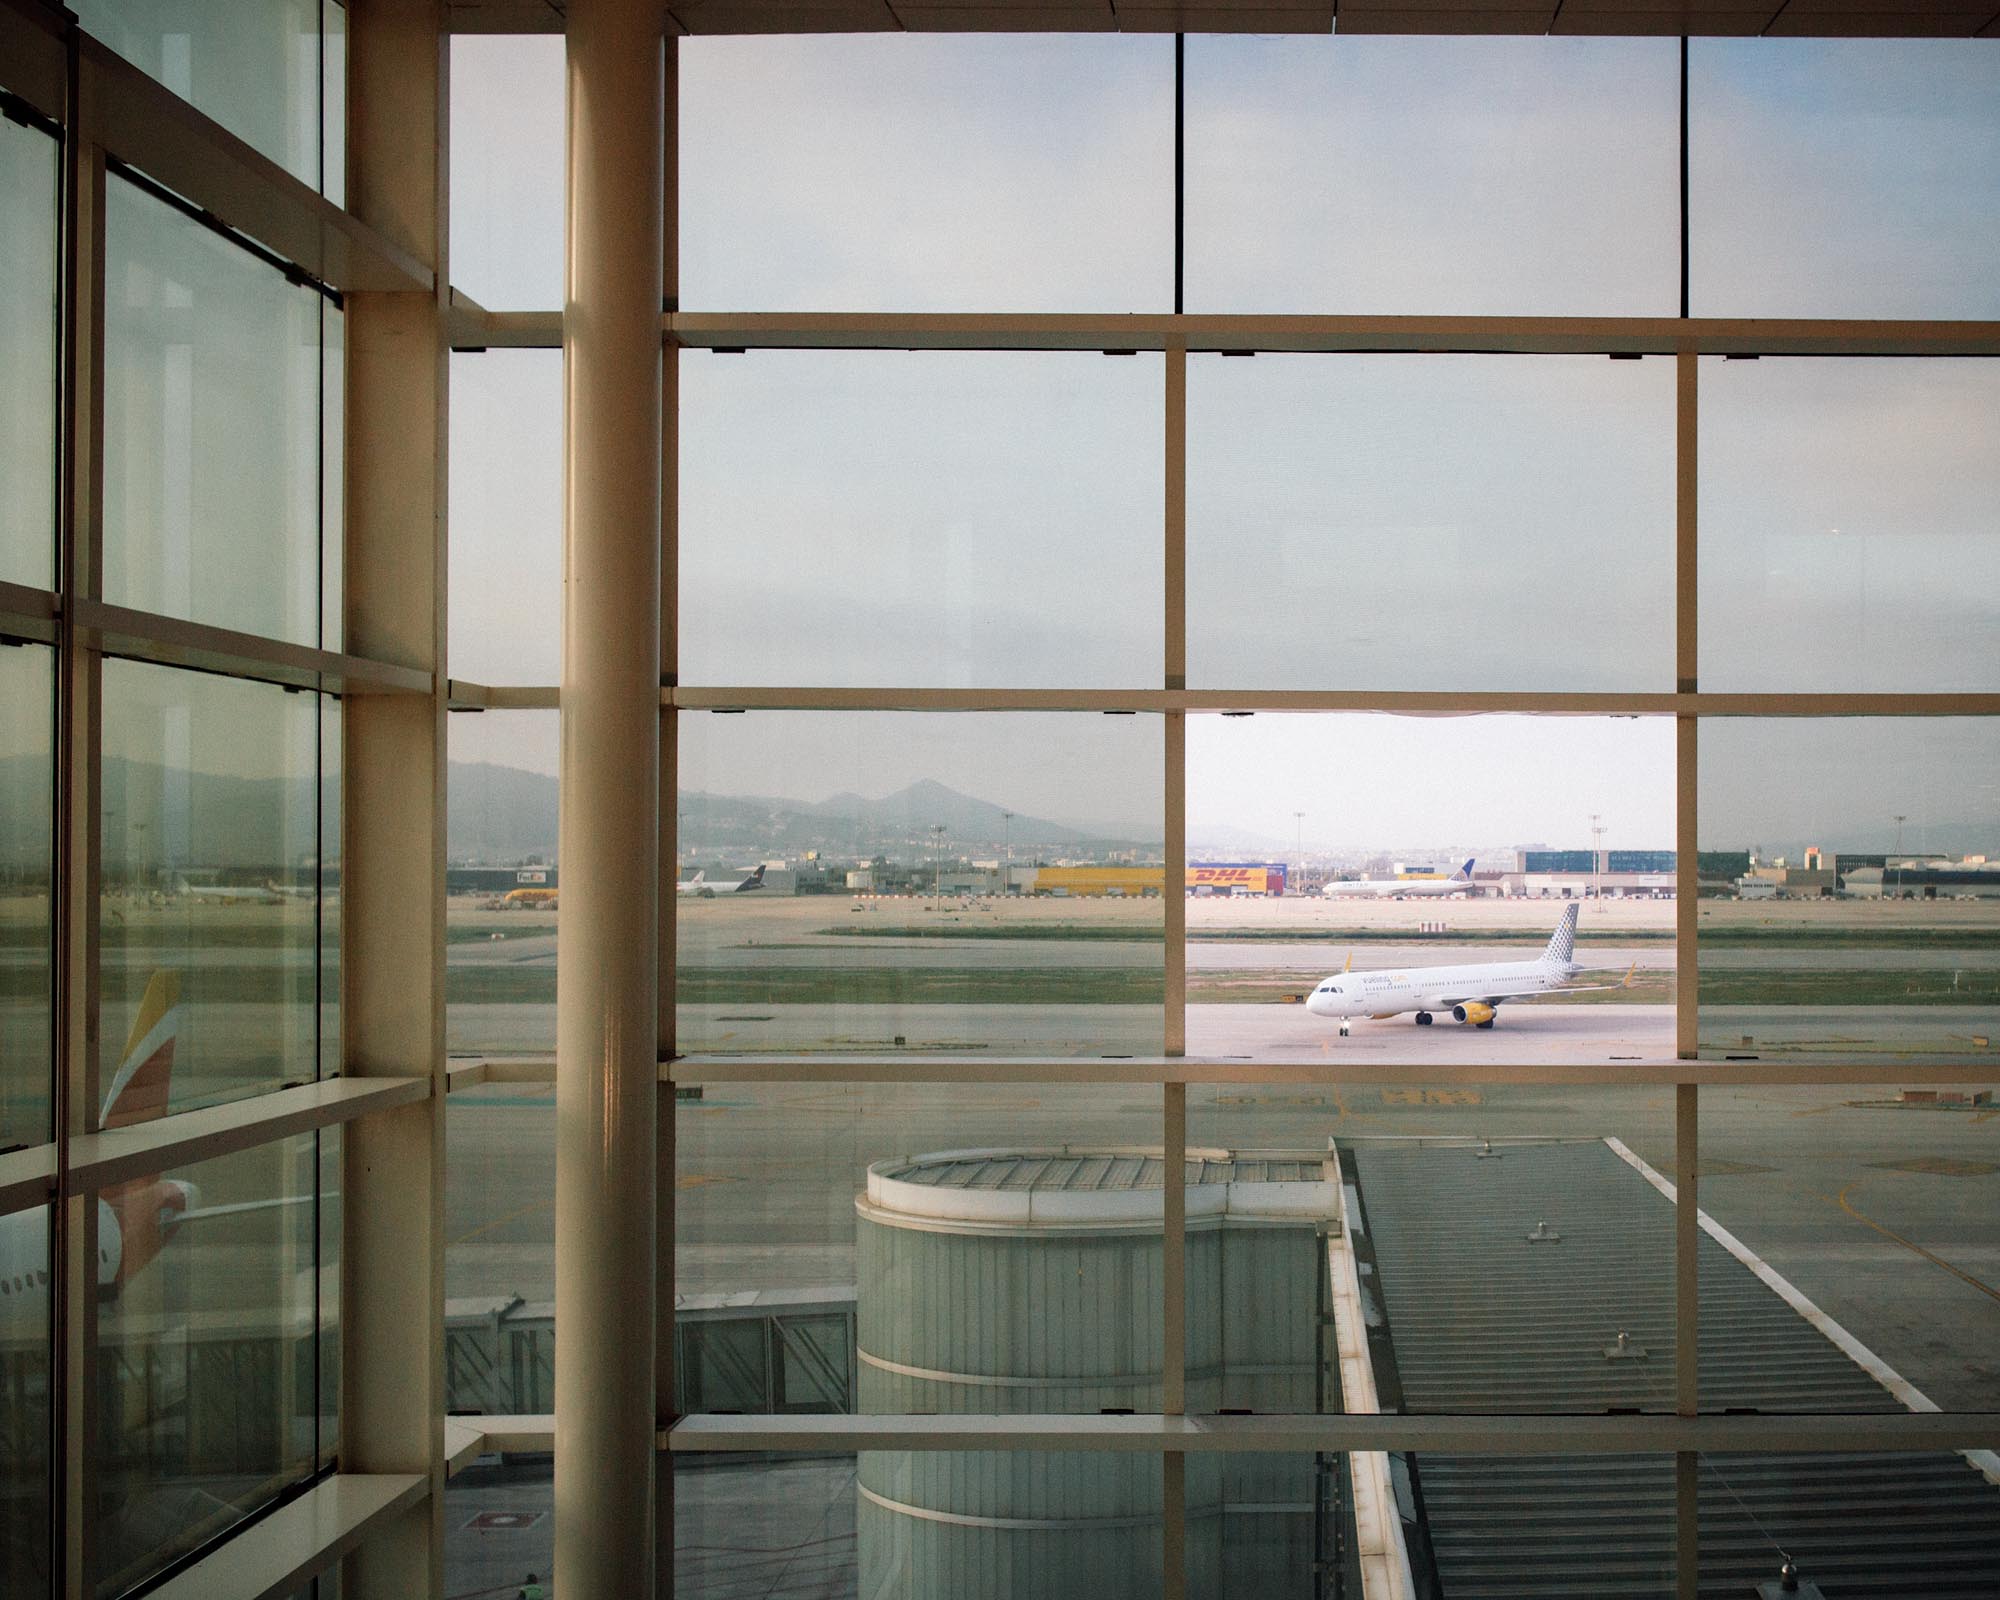 Aeroport de Barcelona – el Prat